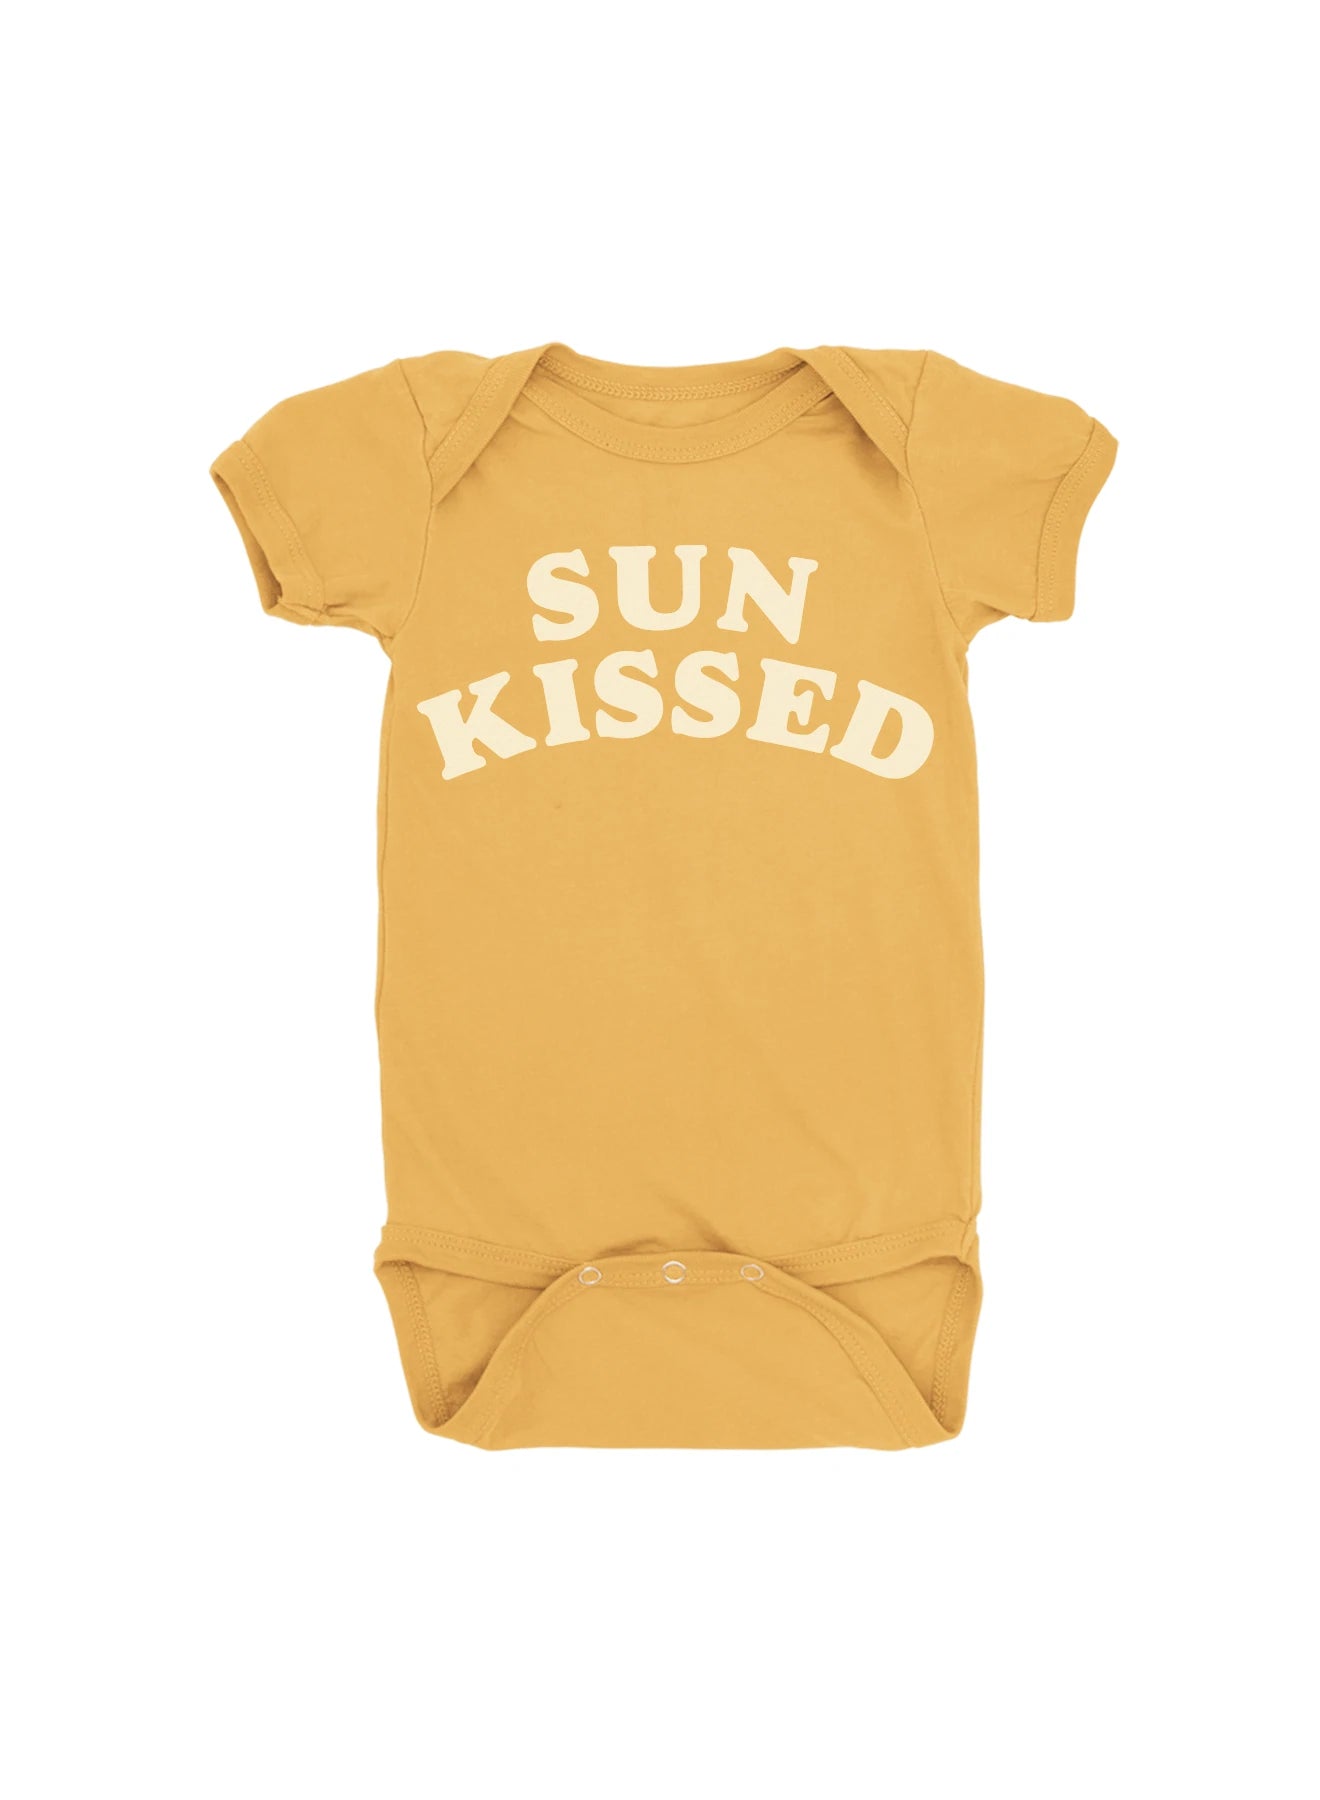 Sun Kissed One Piece  - Doodlebug's Children's Boutique